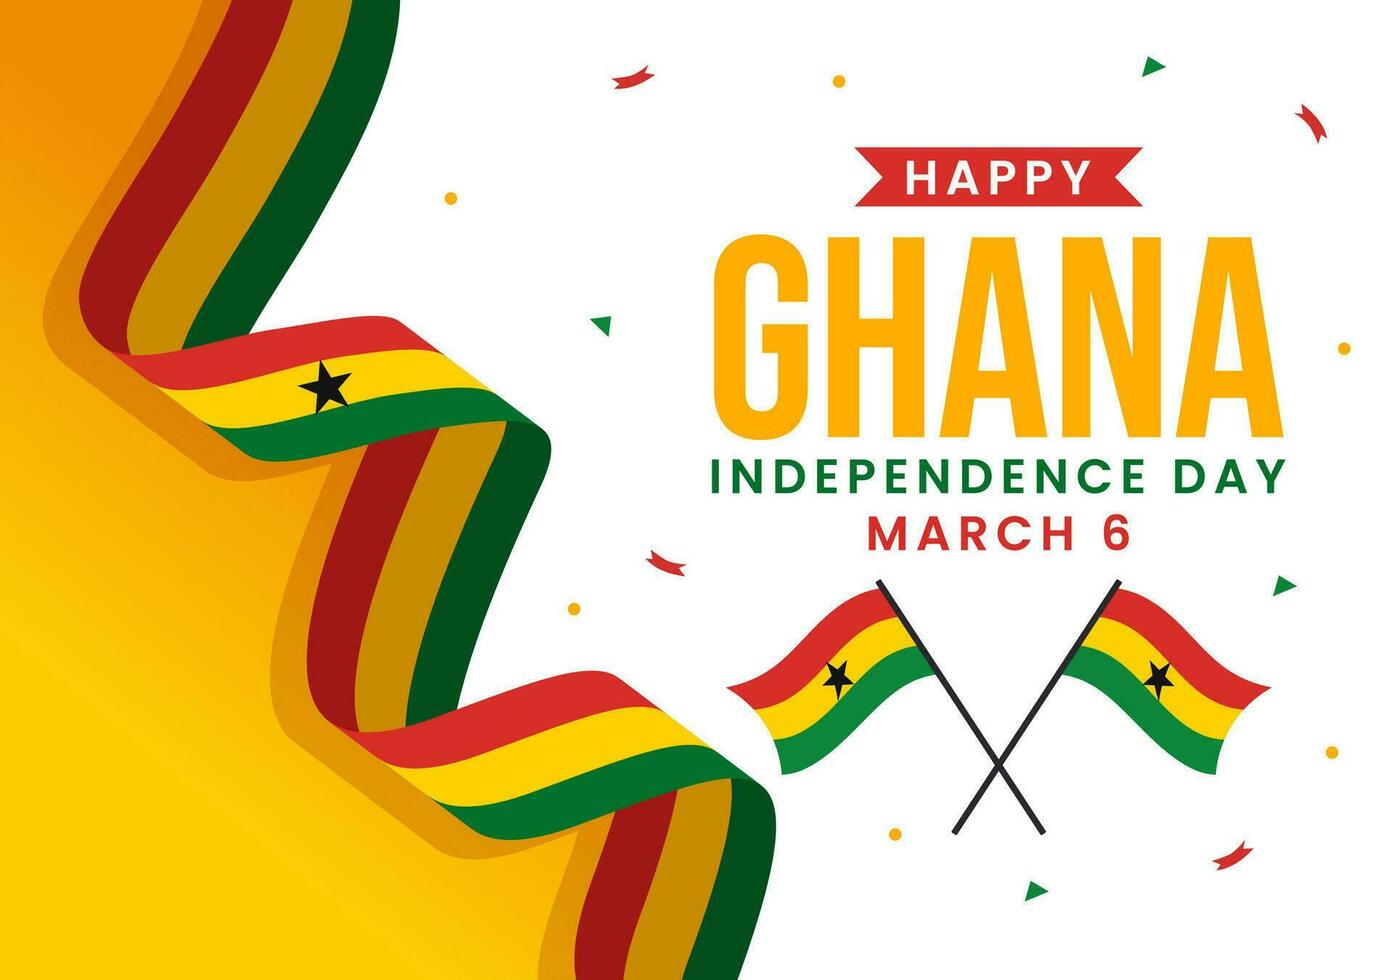 Ghana independencia día celebracion vector ilustración en marzo 6to con ondulación bandera en nacional fiesta plano dibujos animados antecedentes diseño